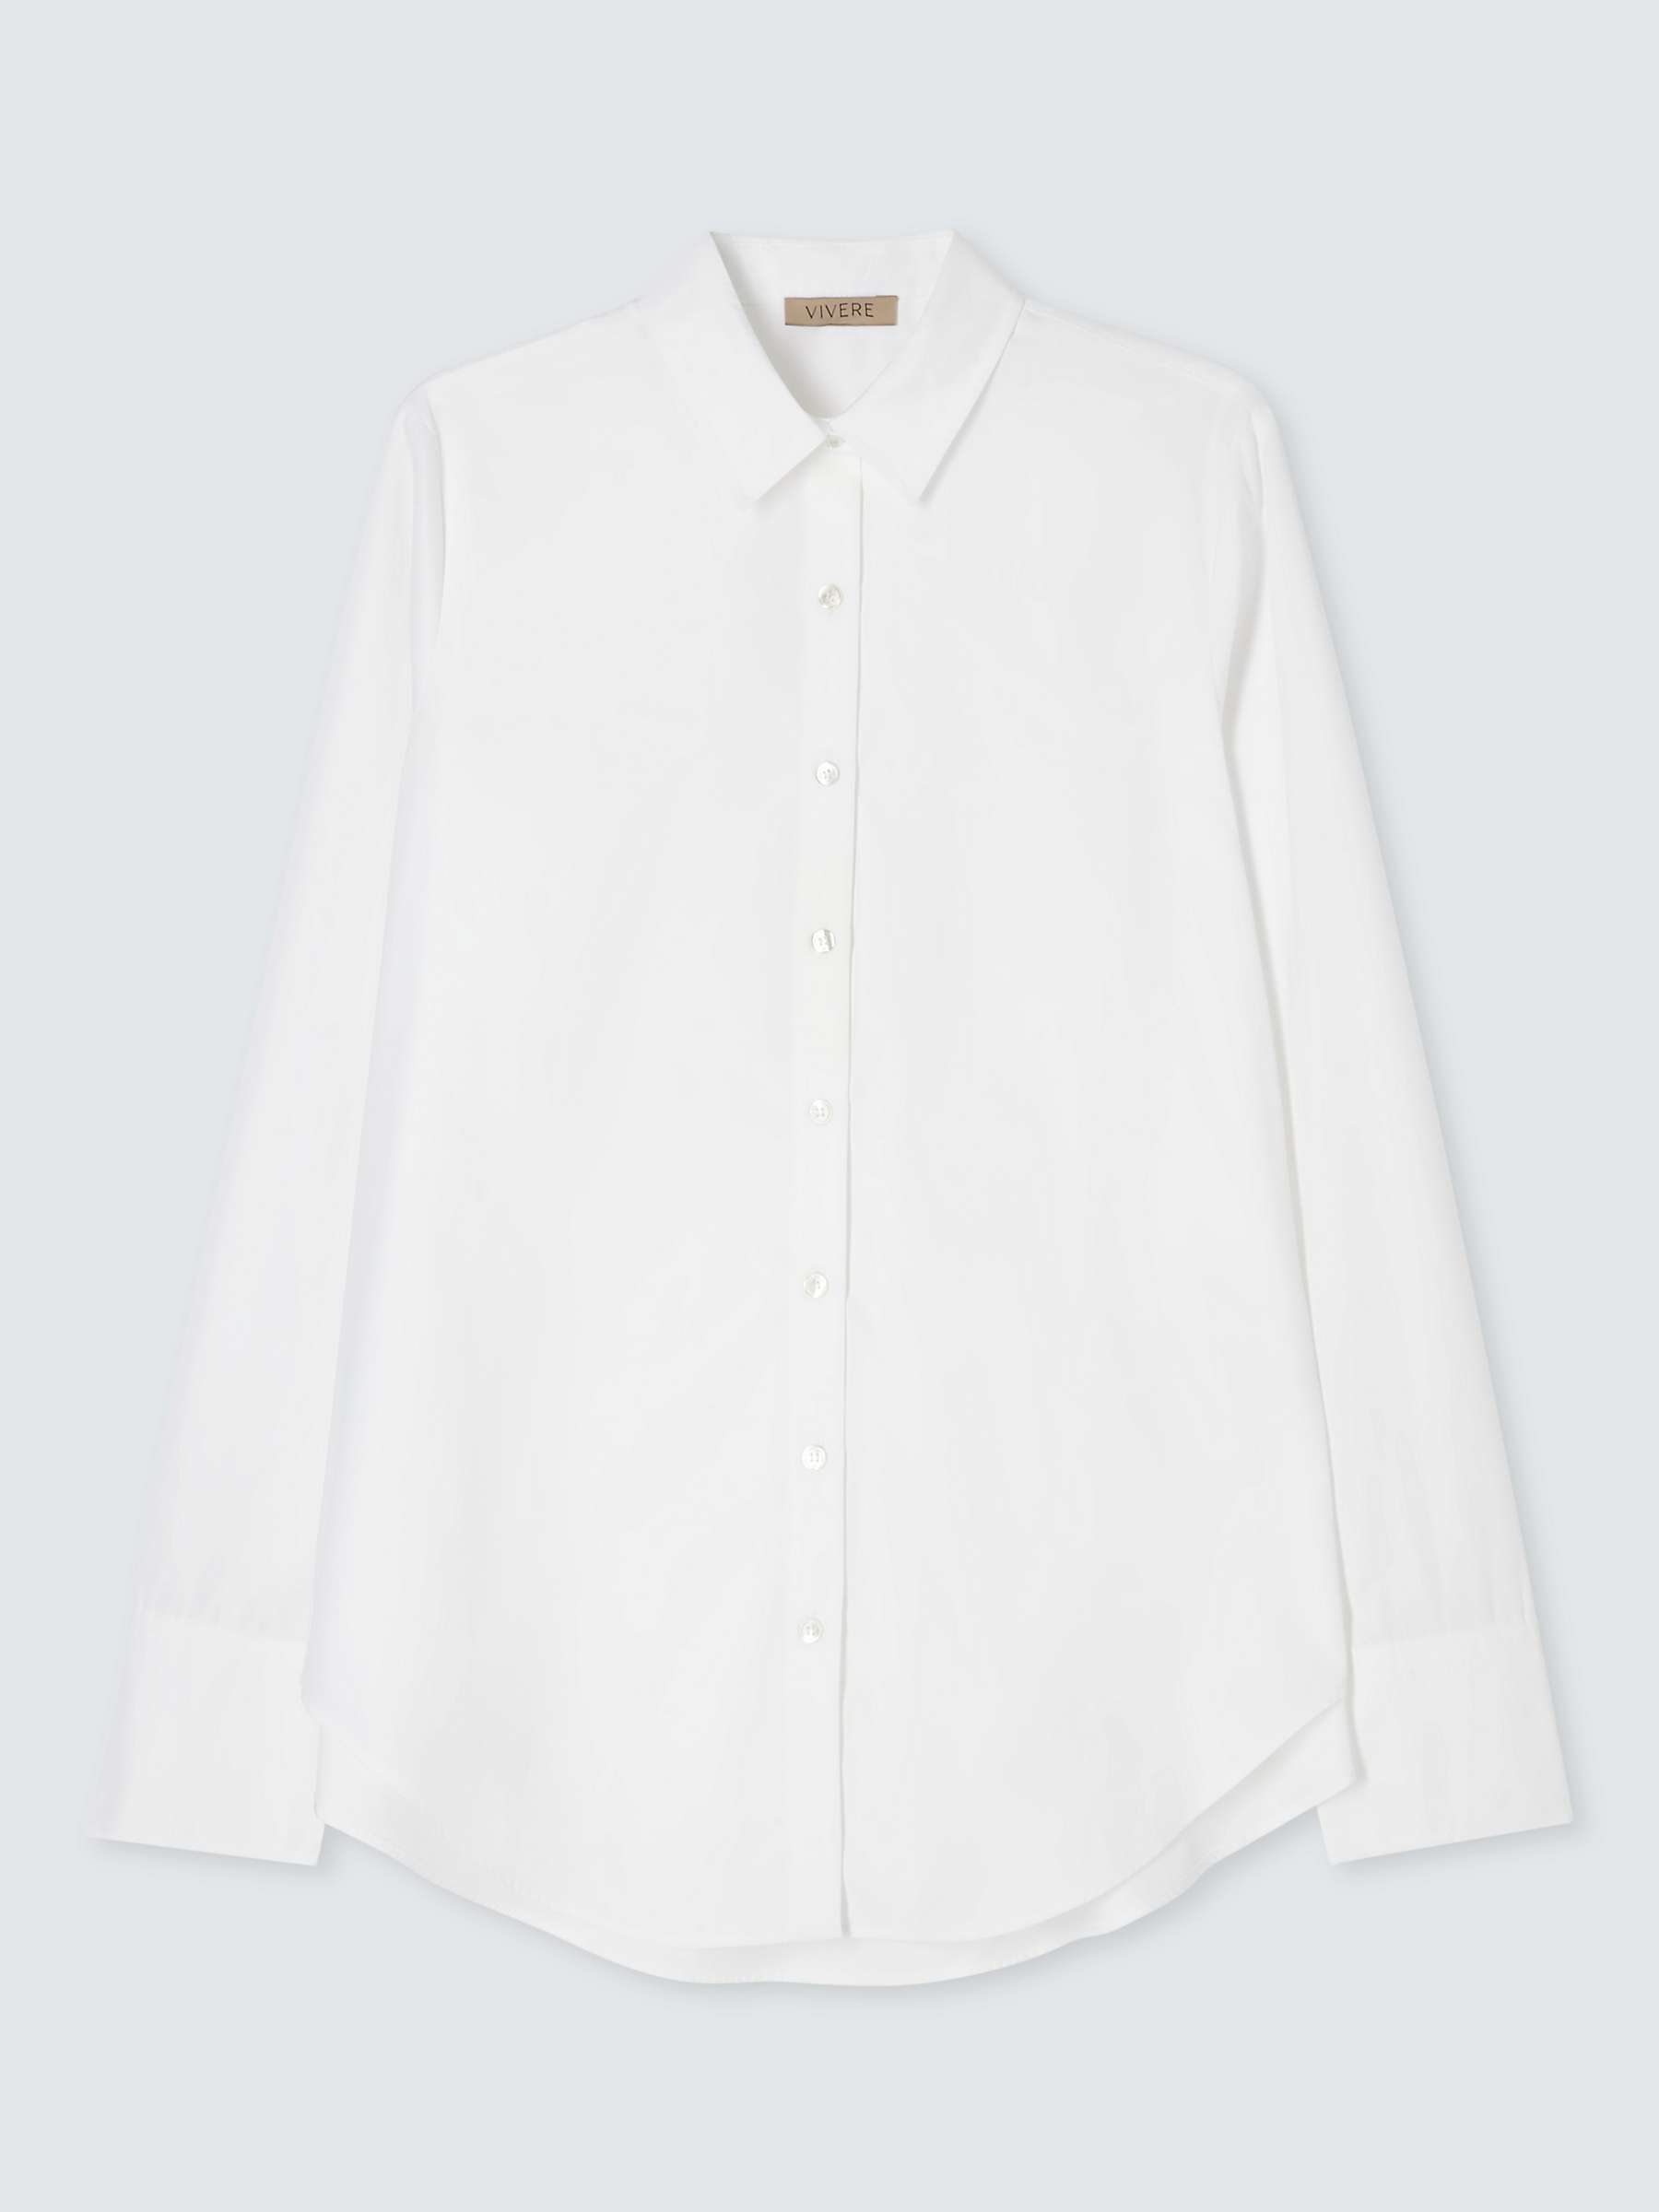 Buy Vivere By Savannah Miller James Cotton Shirt, White Online at johnlewis.com